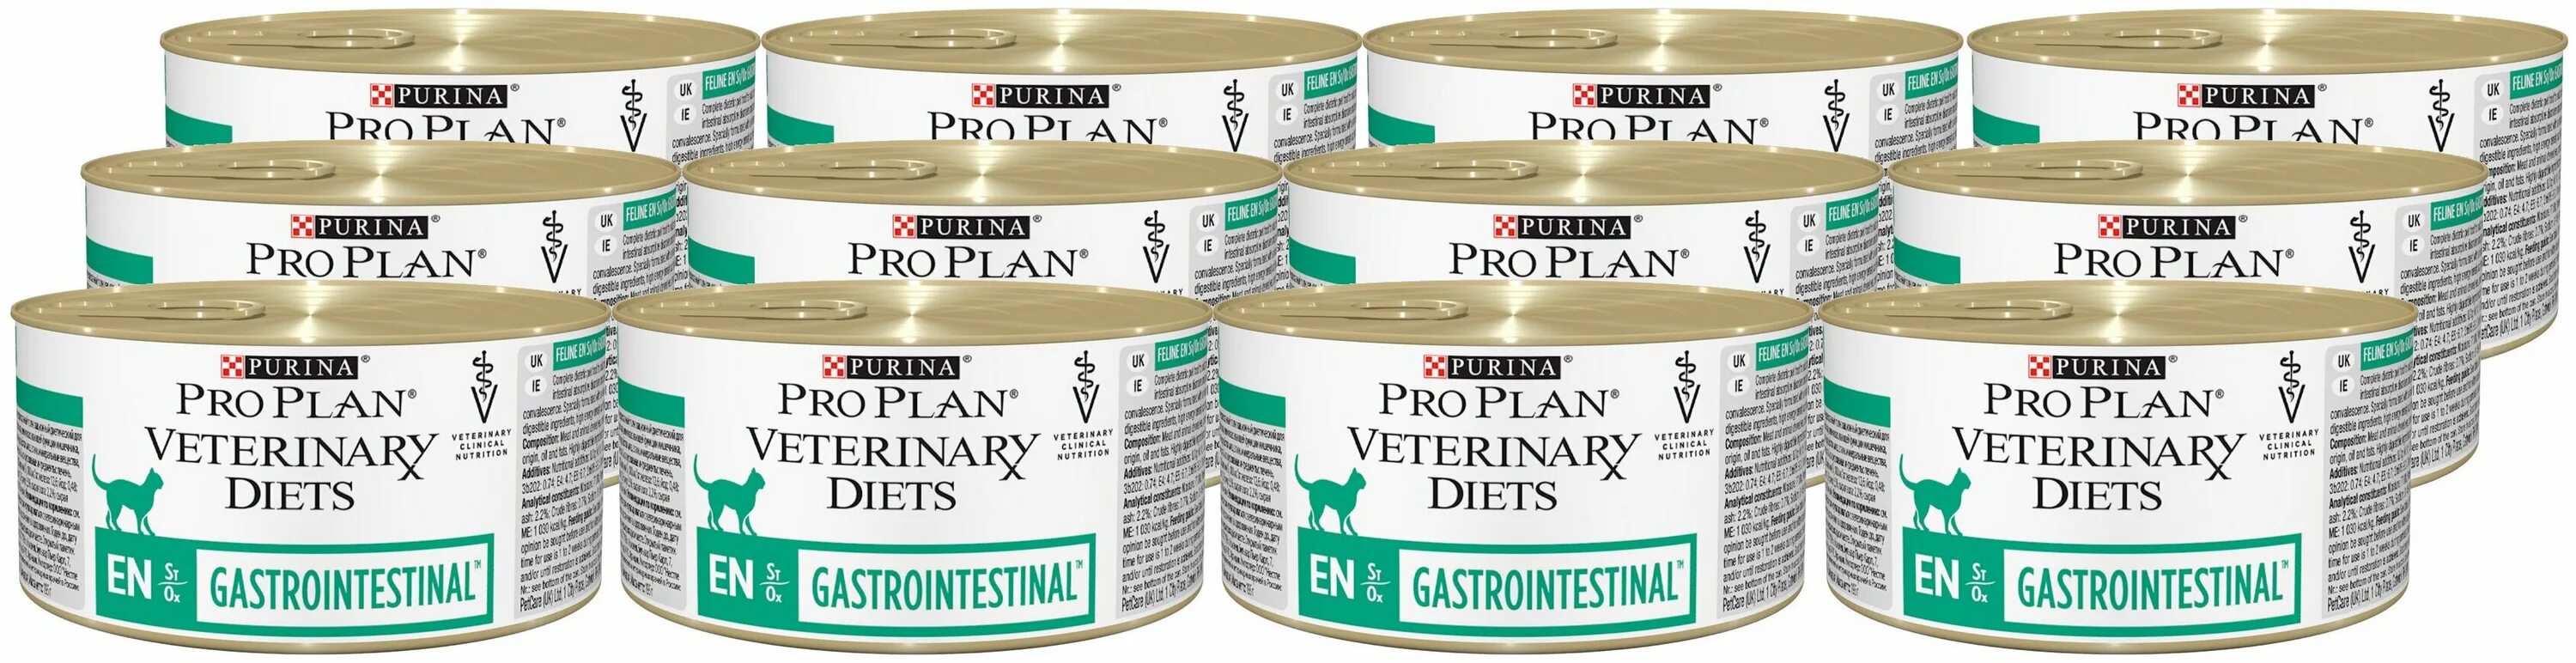 Pro Plan Veterinary Diets en St/Ox Gastrointestinal влажный корм для кошек. Plan Veterinary Diets Gastrointestinal en для кошек St/Ox. Корм для кошек Pro Plan Veterinary Diets en. Корм влажный для котят Pro Plan Veterinary Diets.